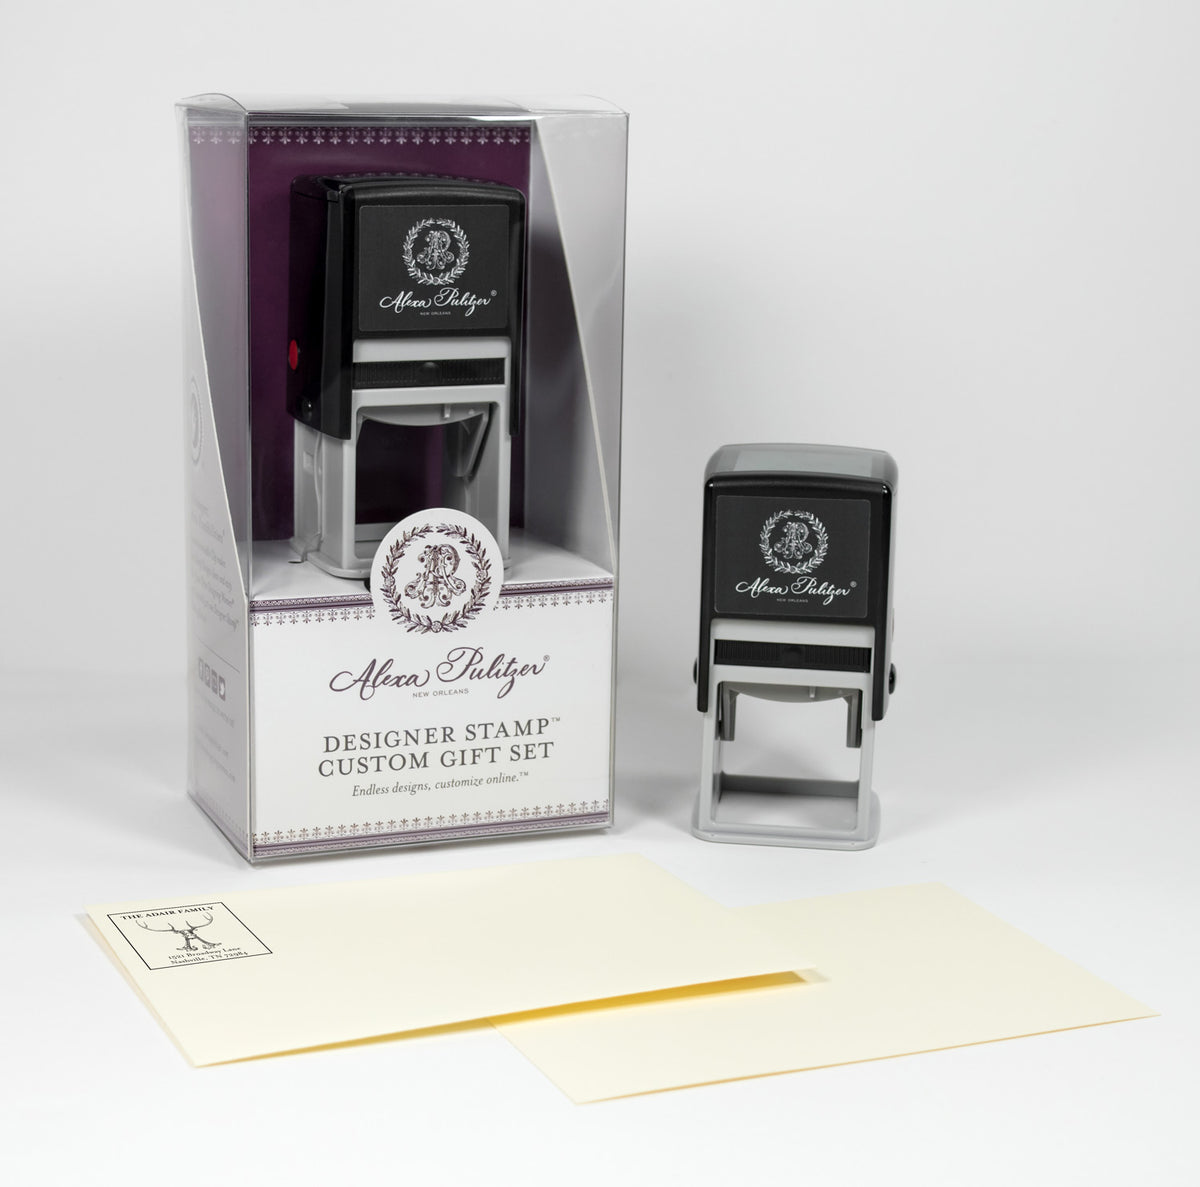 Customizable Stamp – Alexa Pulitzer